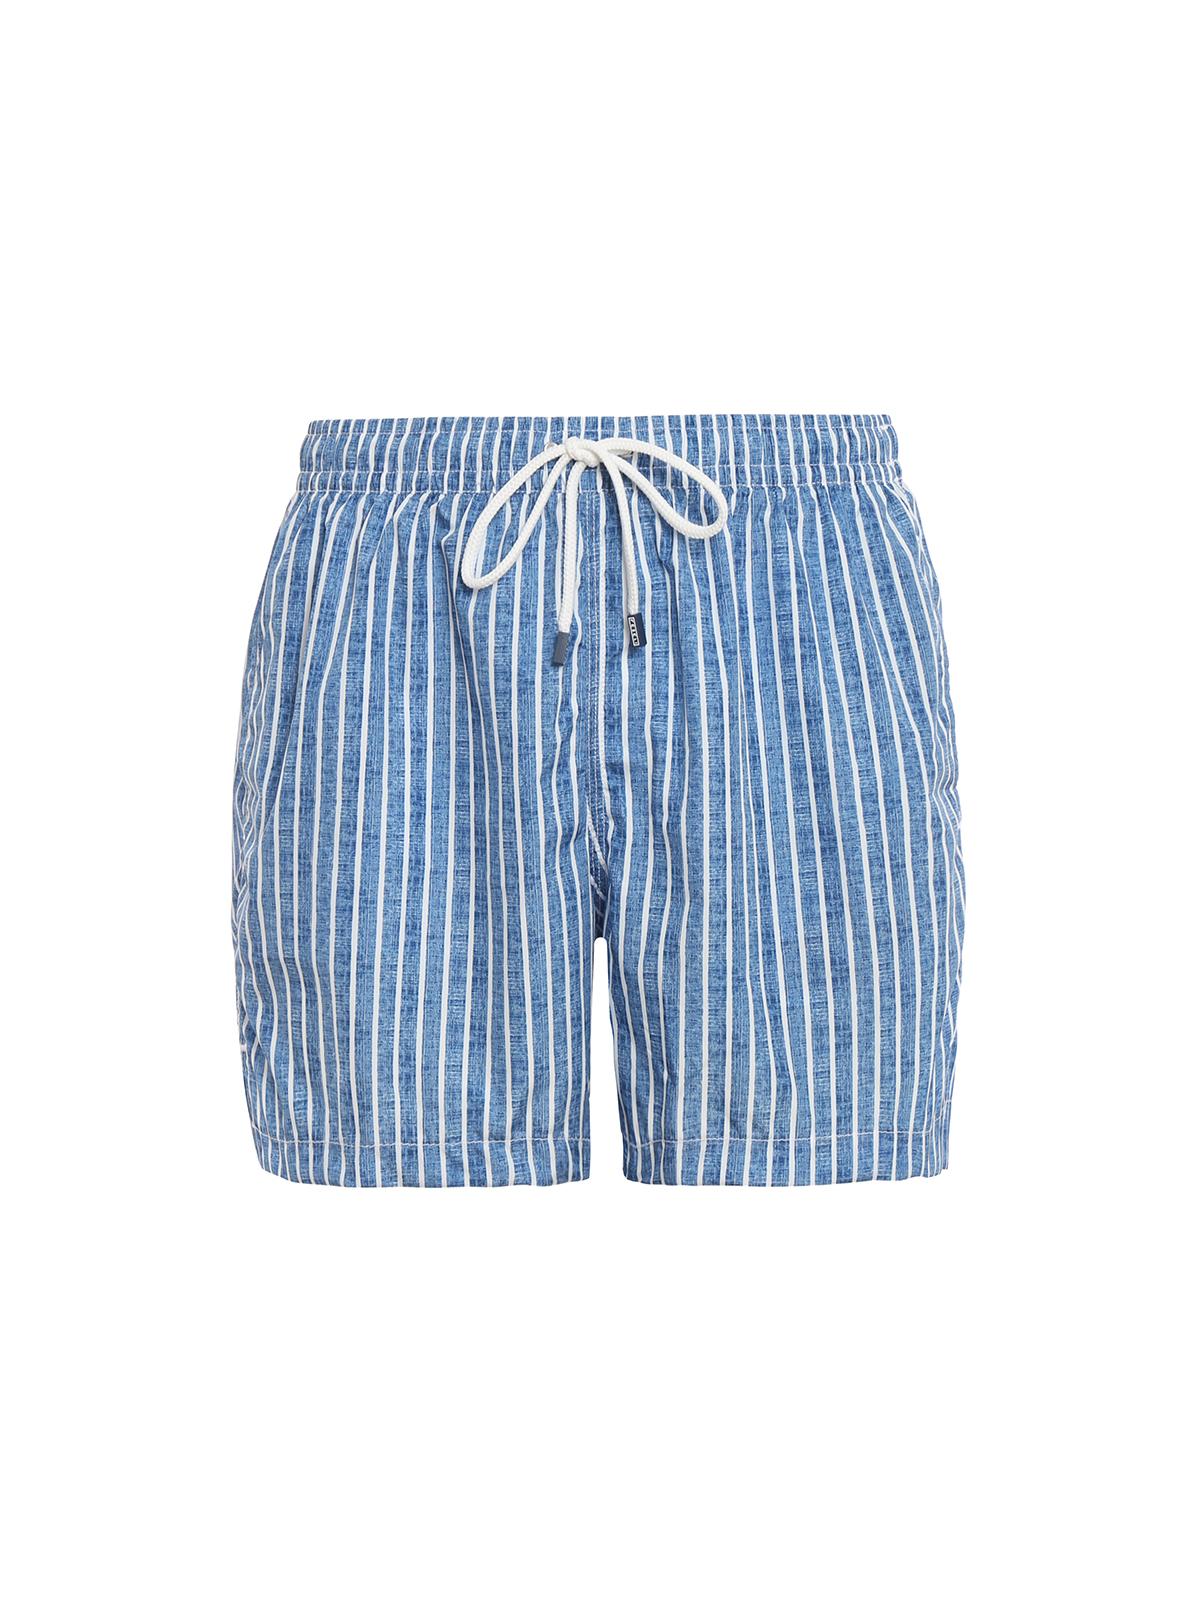 Fedeli Blue And White Striped Swim Shorts for Men - Lyst